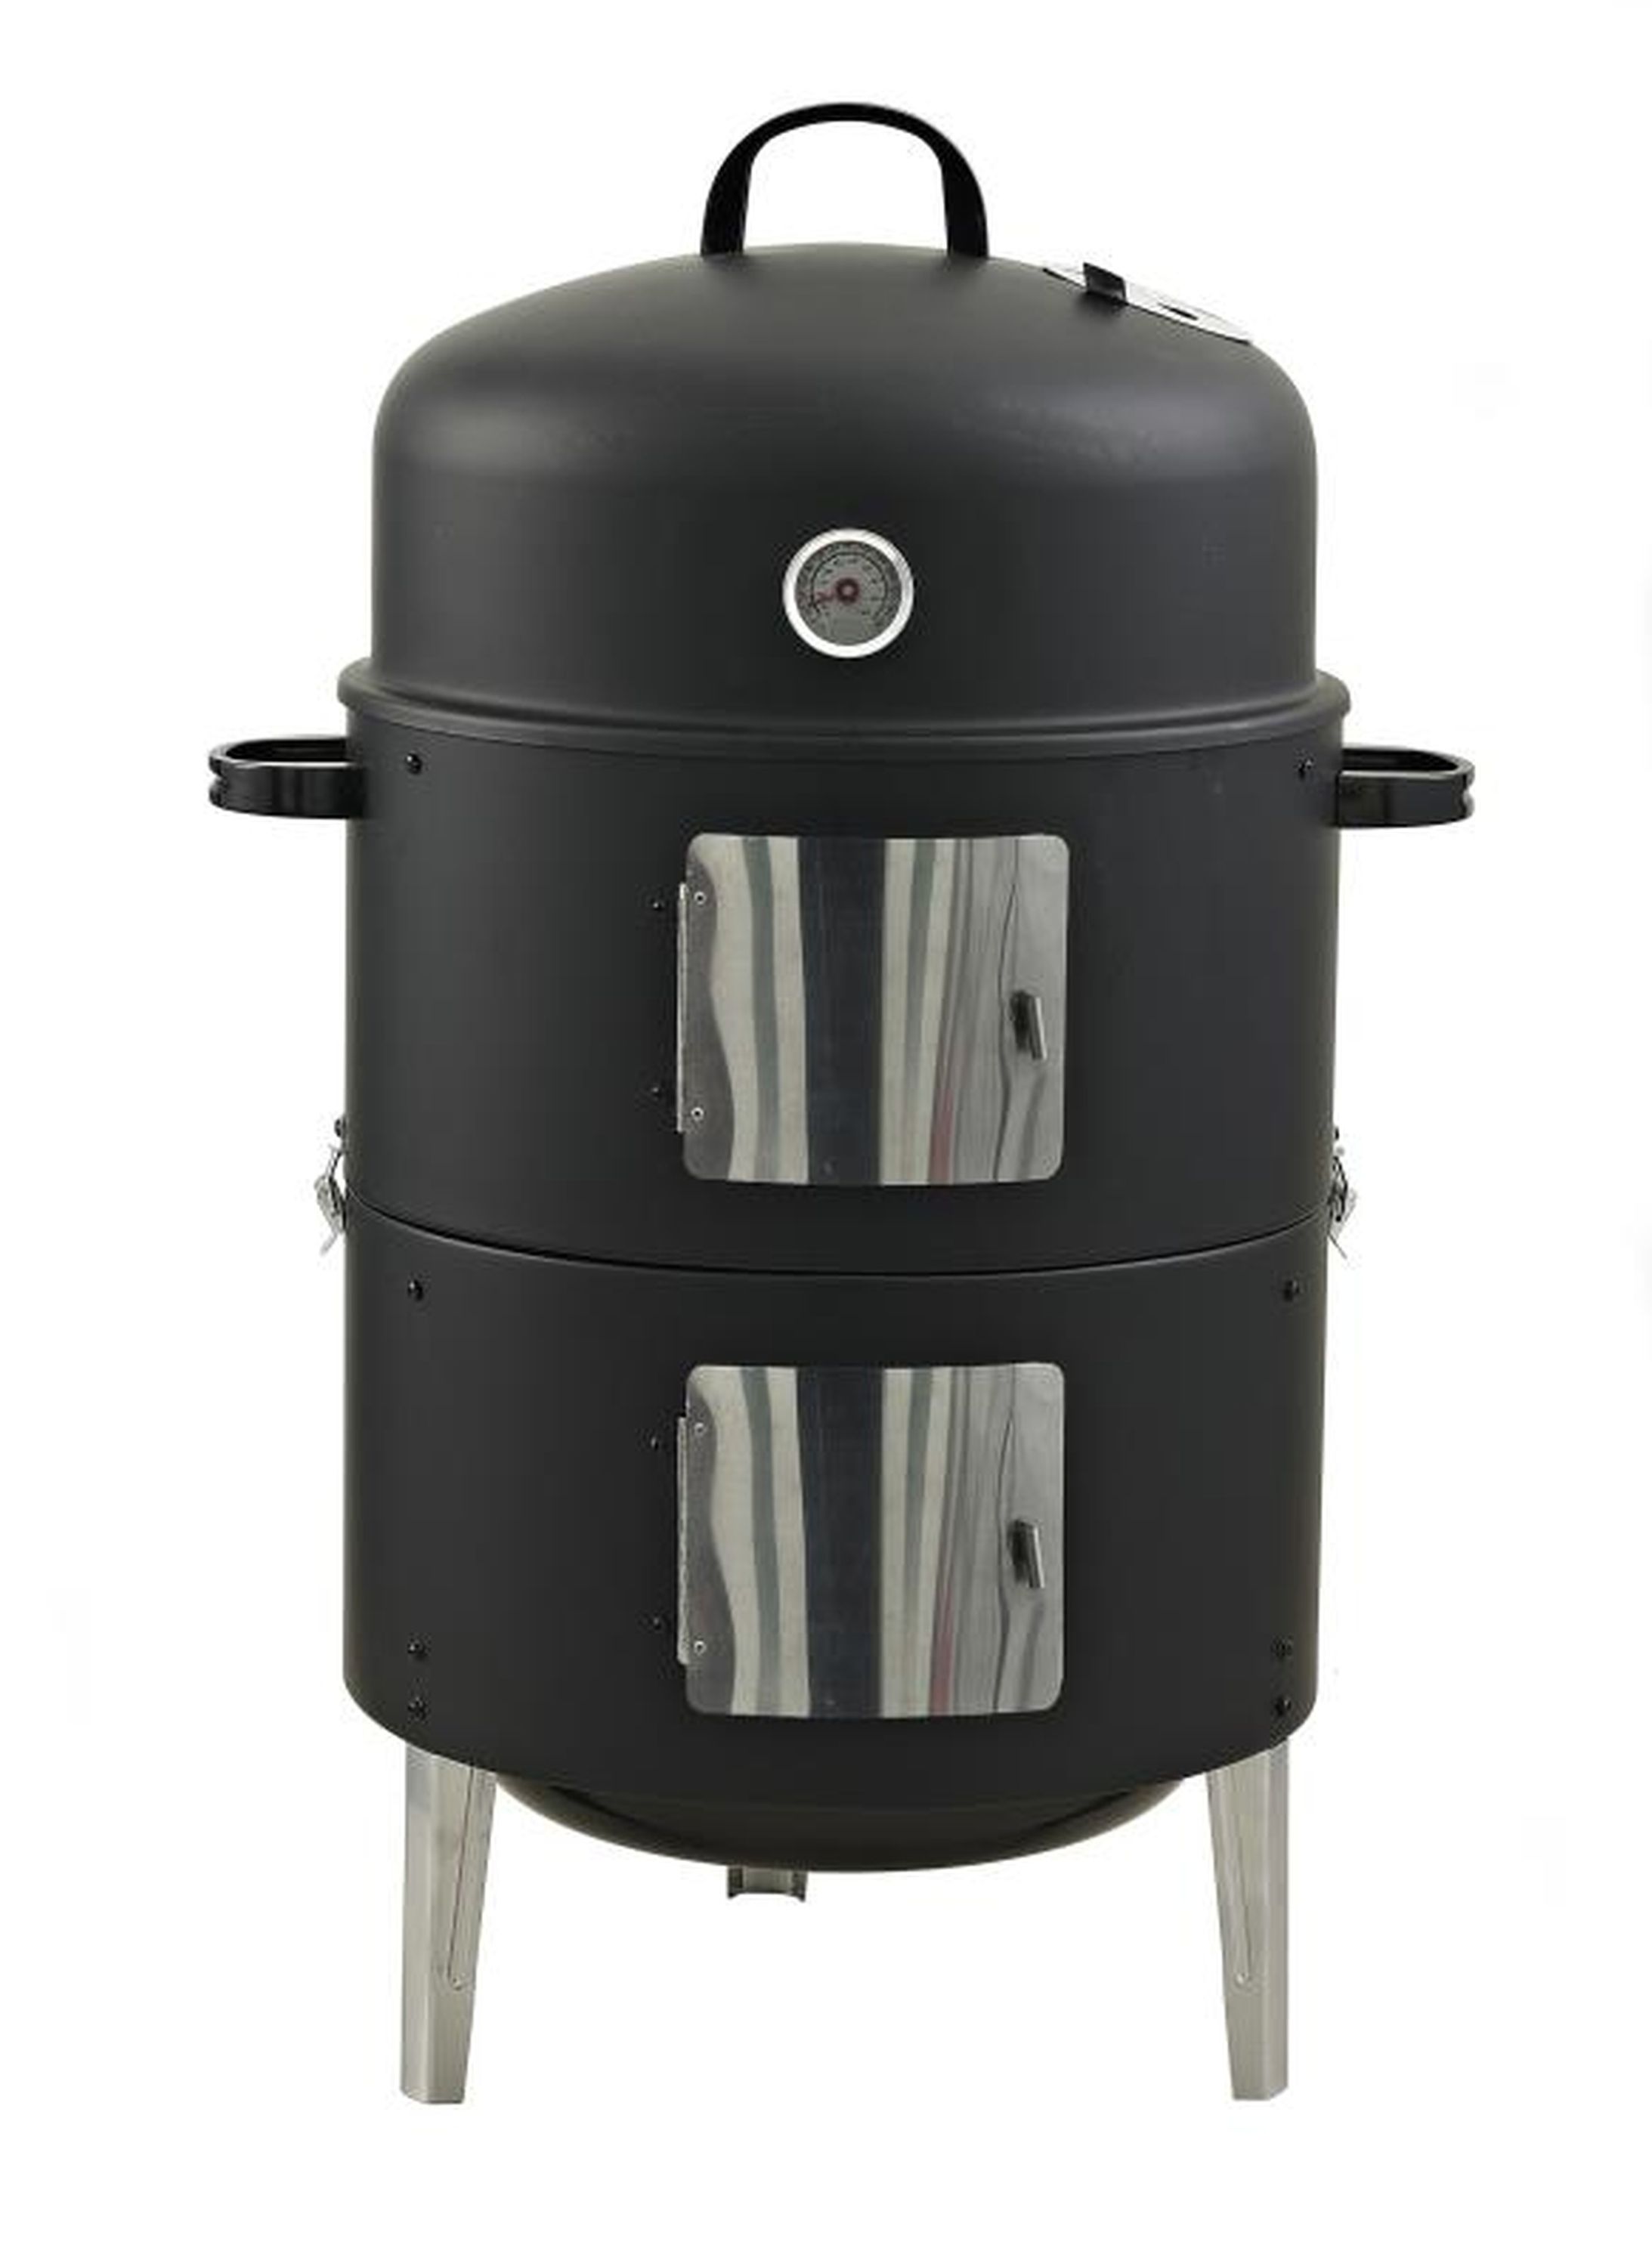 Räucherofen Smoker XL 3 in 1 Watersmoker BBQ